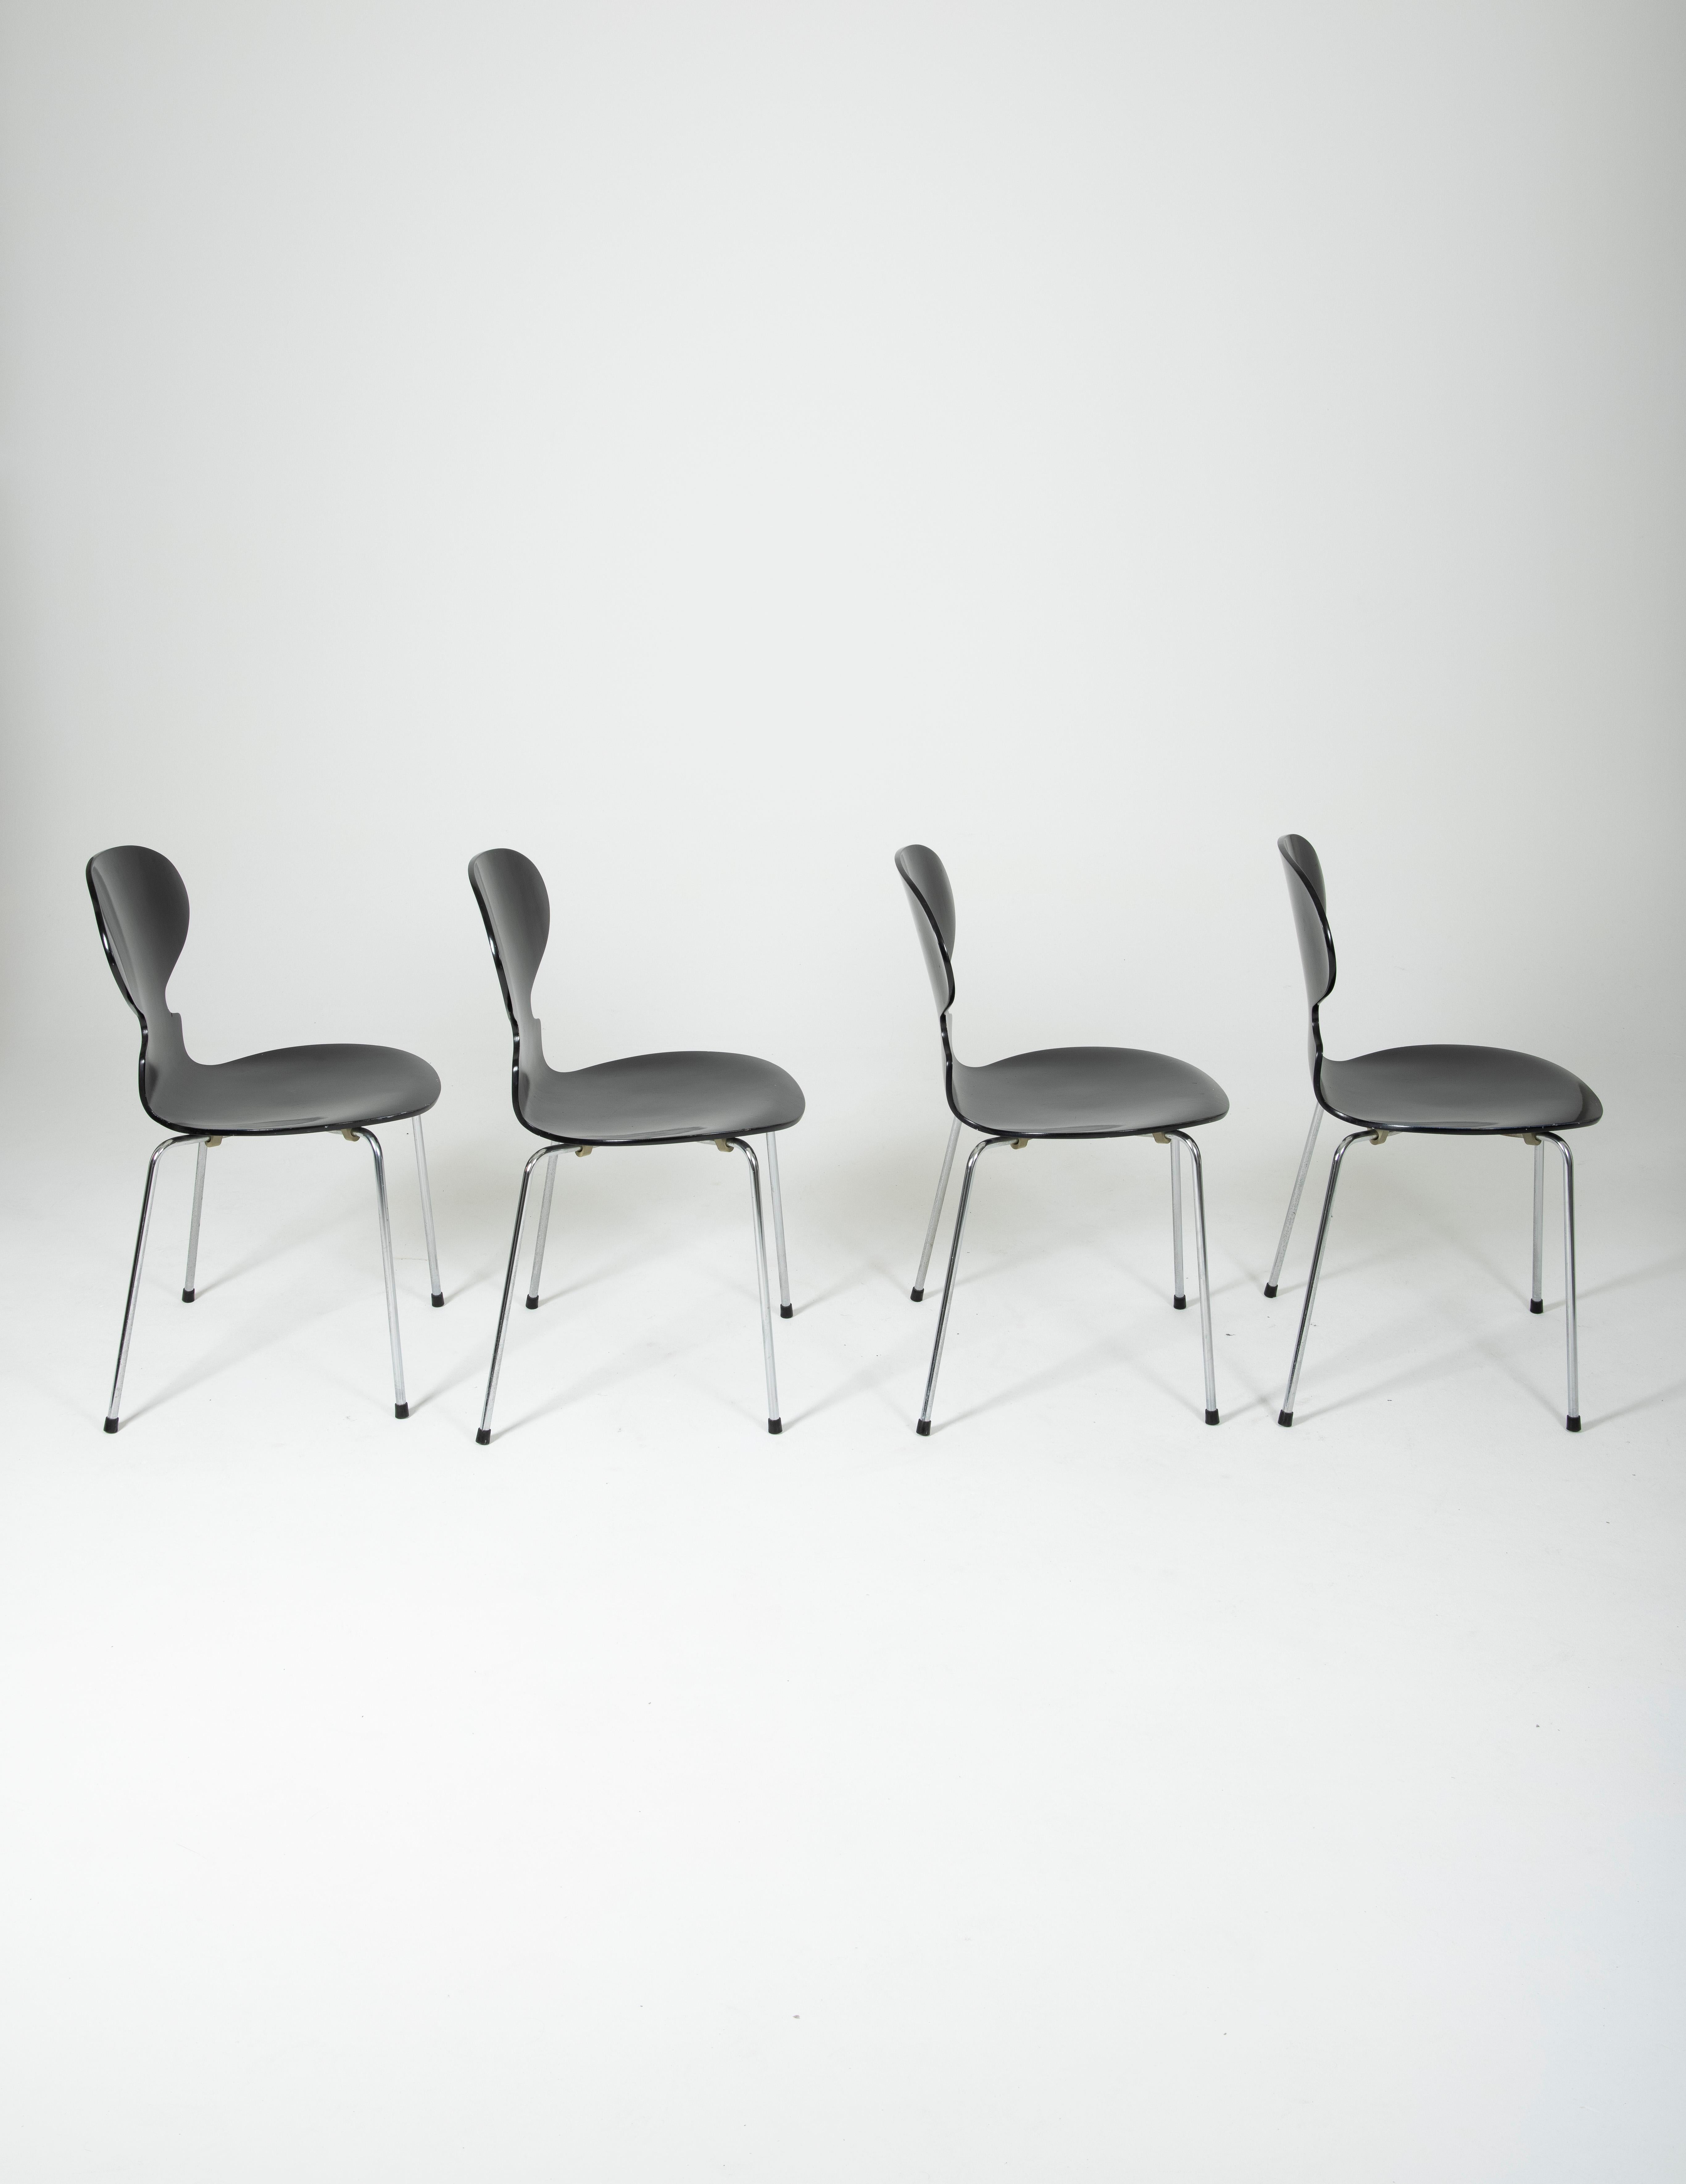 Steel  Ant Chairs Model 3101 by Arne Jacobsen for Fritz Hansen, 1986